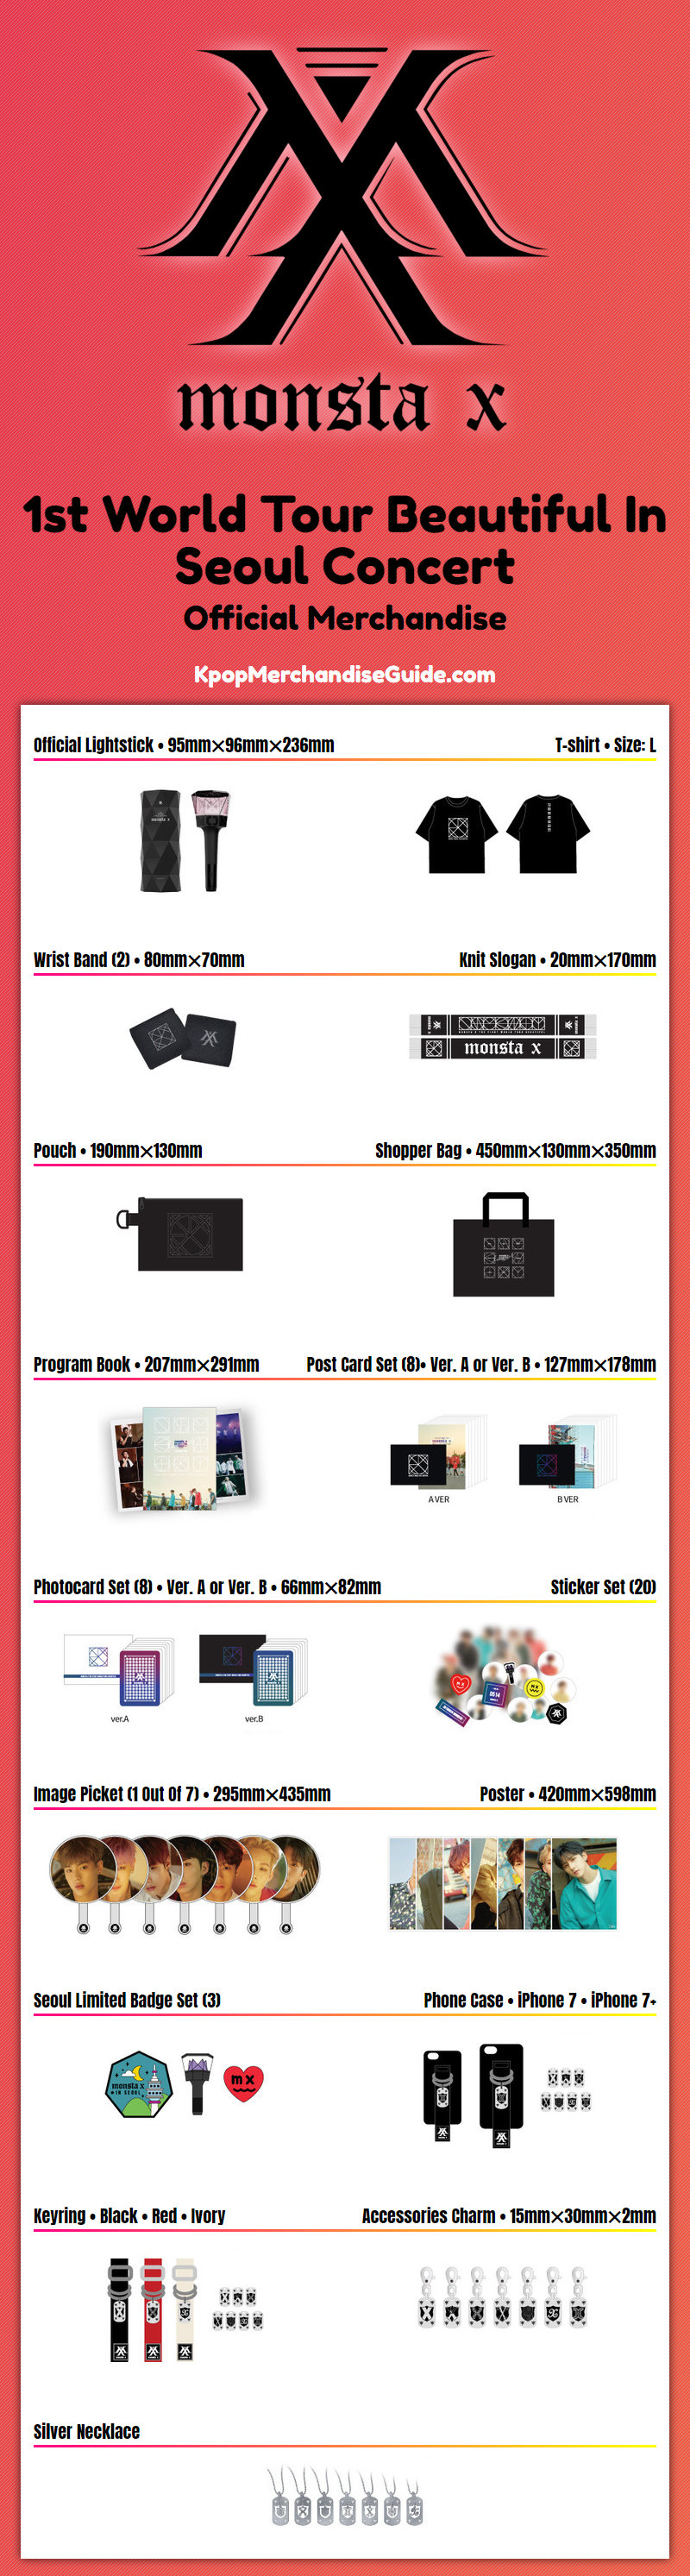 1st World Tour - Monsta X Beautiful In Seoul Concert Merchandise